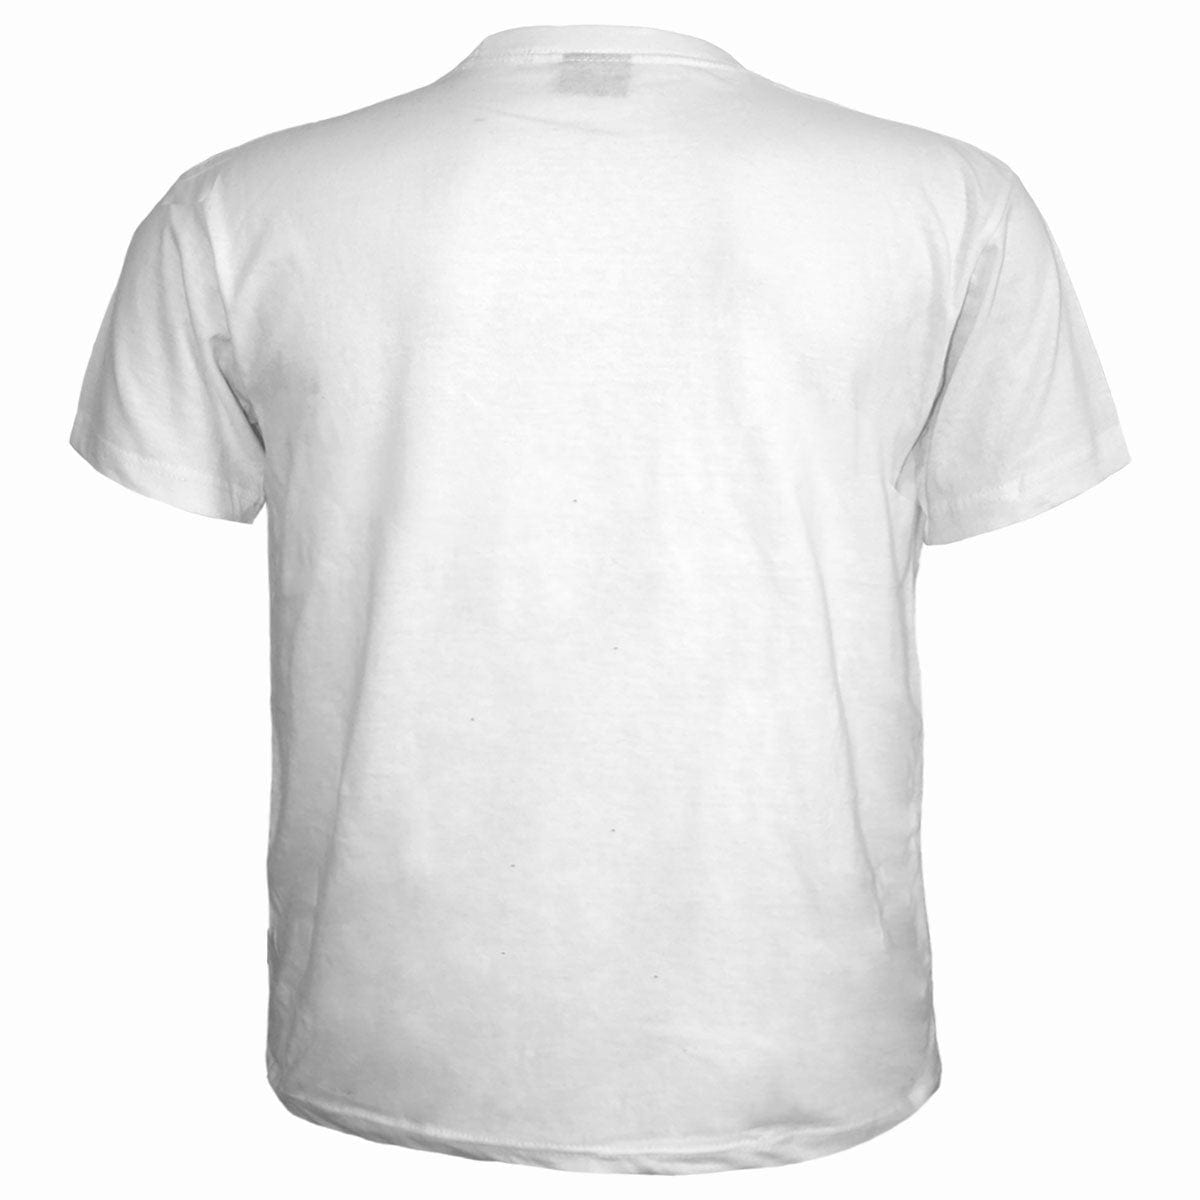 BEAST WITHIN - T-Shirt White - Spiral USA